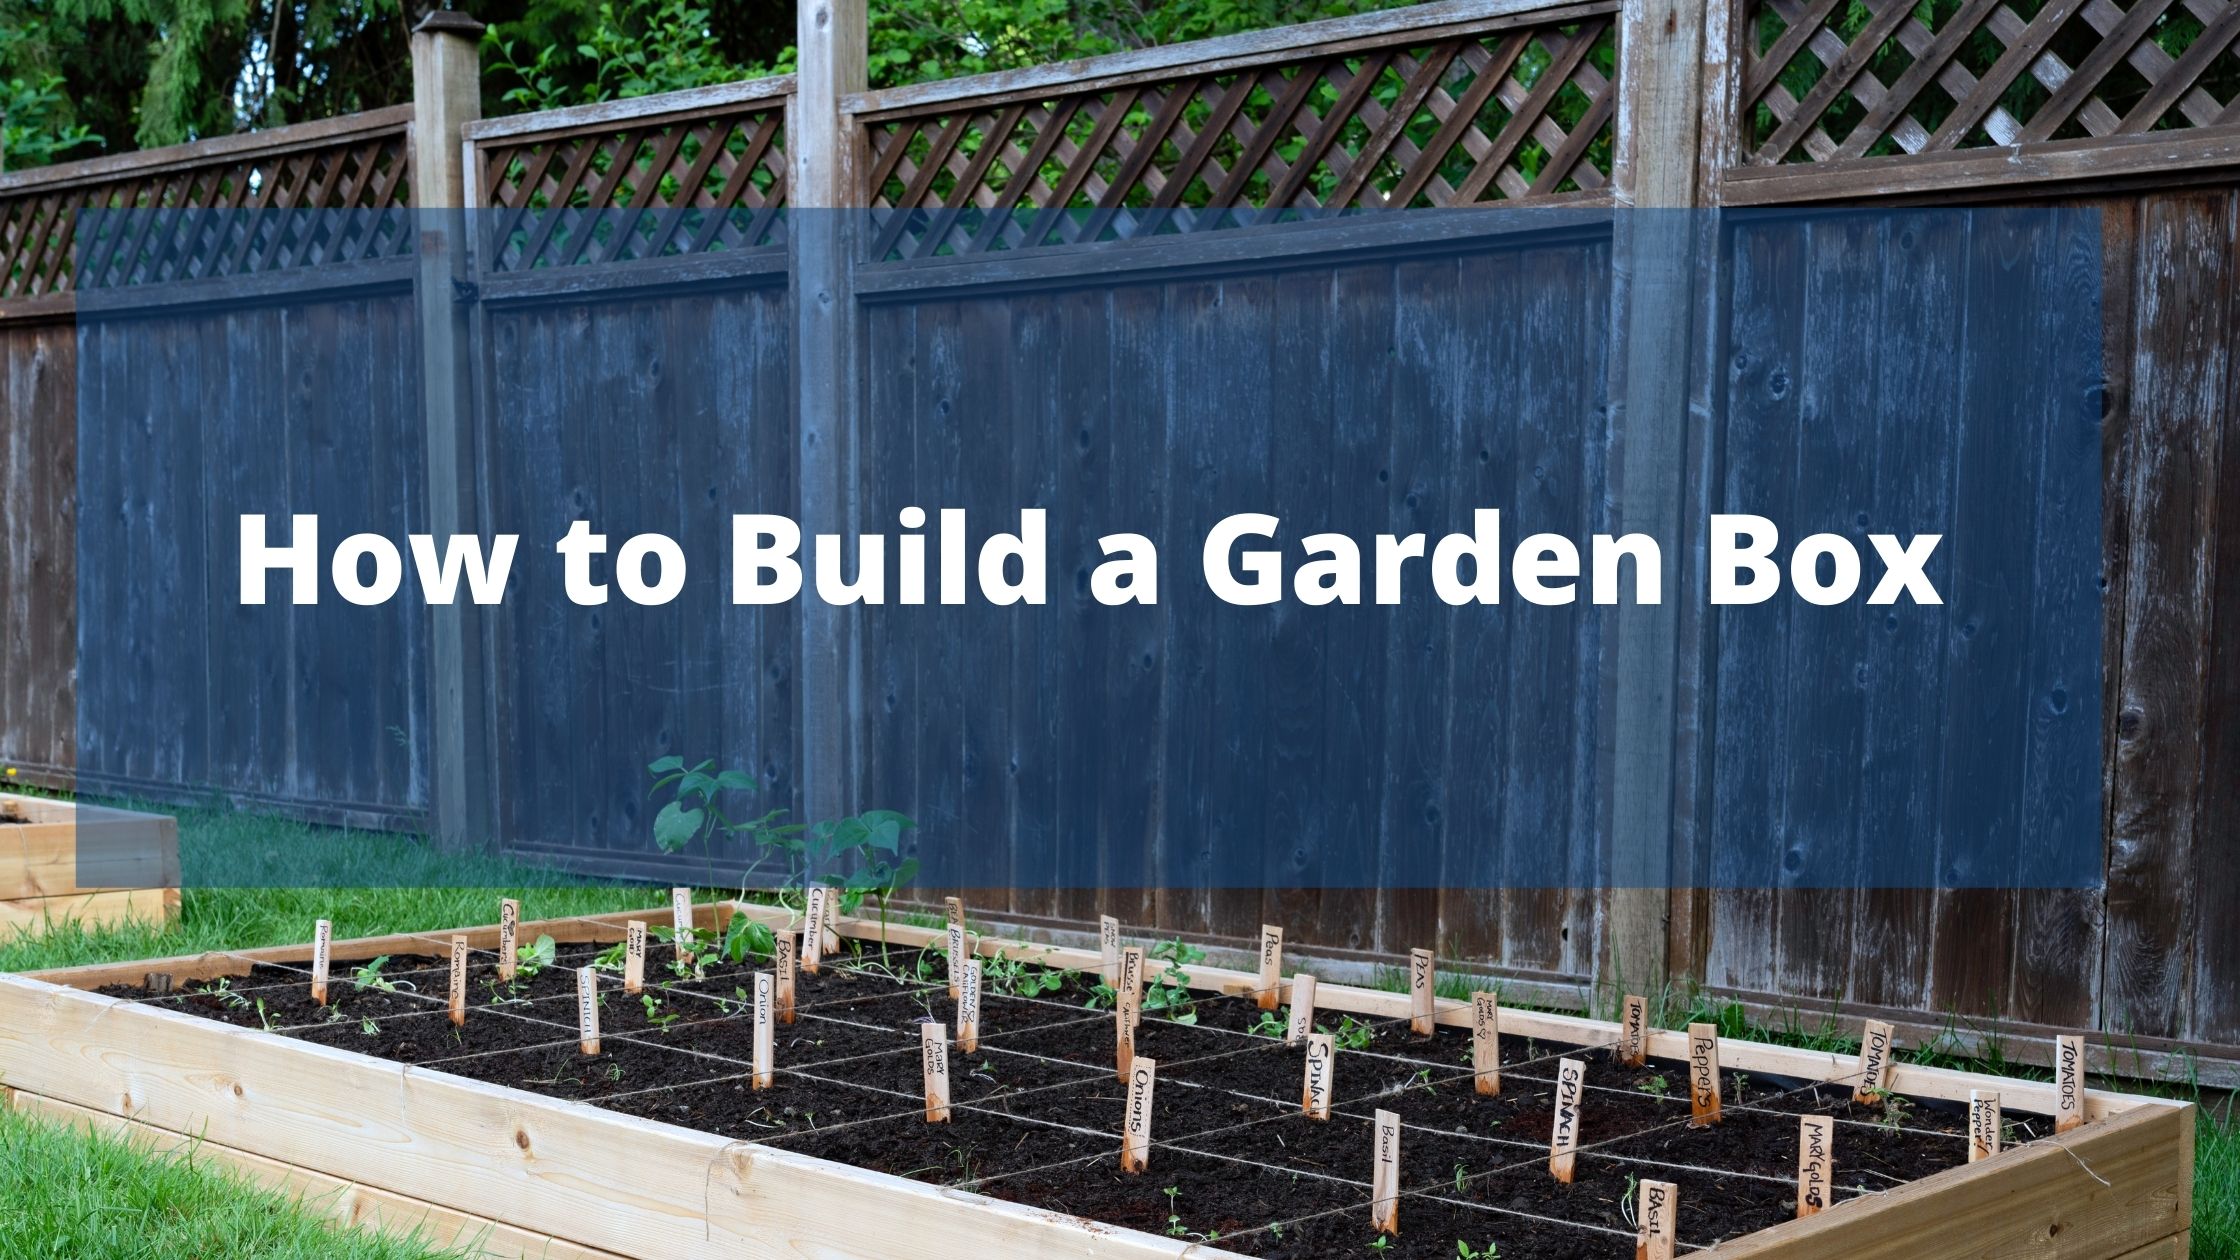 https://handymanconnection.com/brighton/wp-content/uploads/sites/69/2021/06/How-to-Build-a-Garden-Box-1.jpg